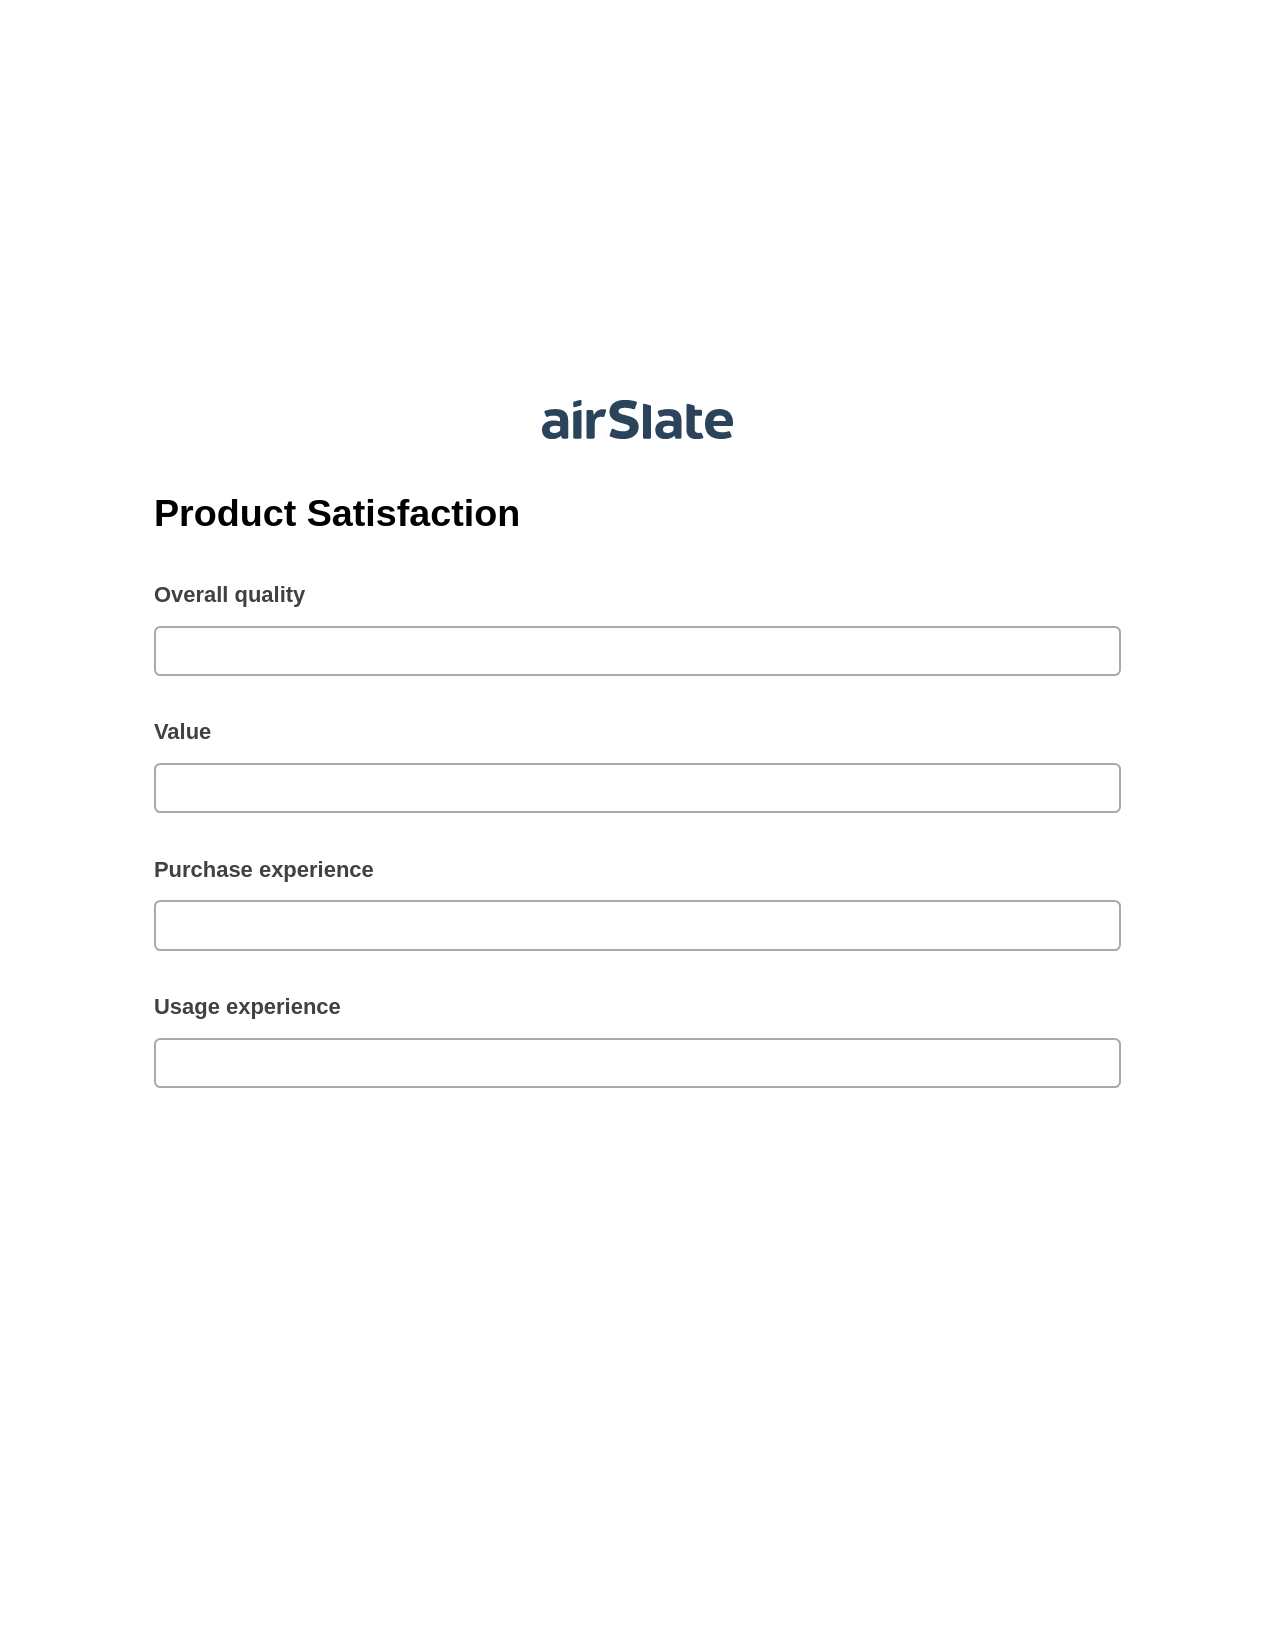 Product Satisfaction Pre-fill from CSV File Bot, Google Cloud Print Bot, Dropbox Bot